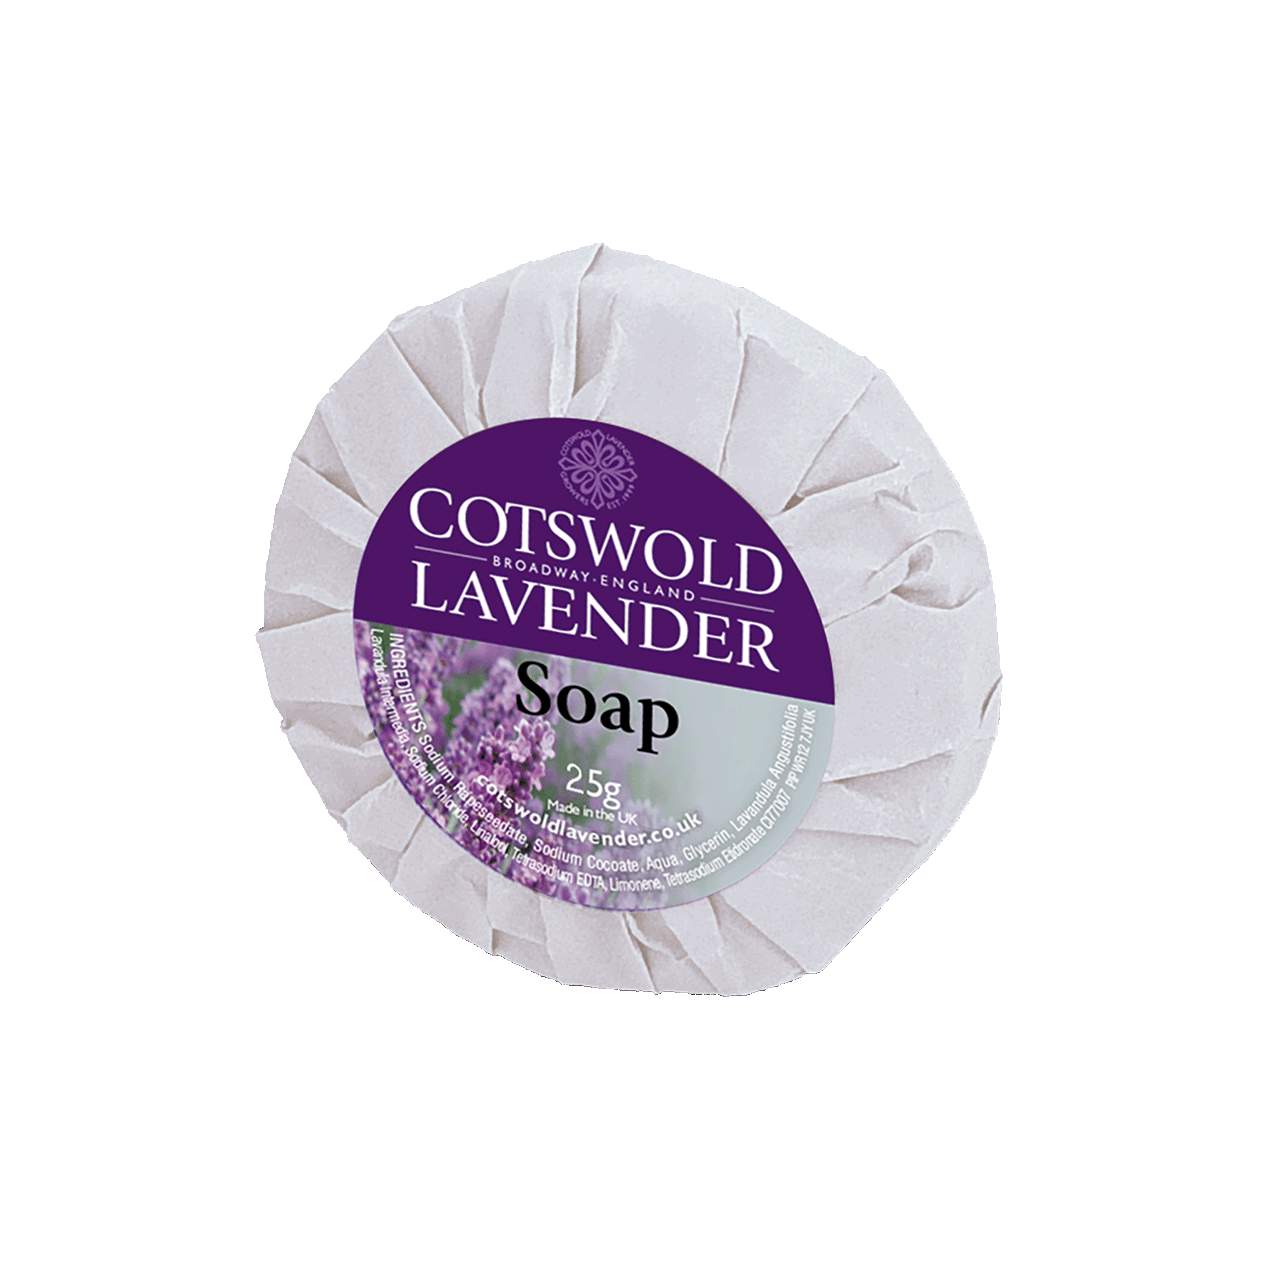 Lavender Triple Milled Soap